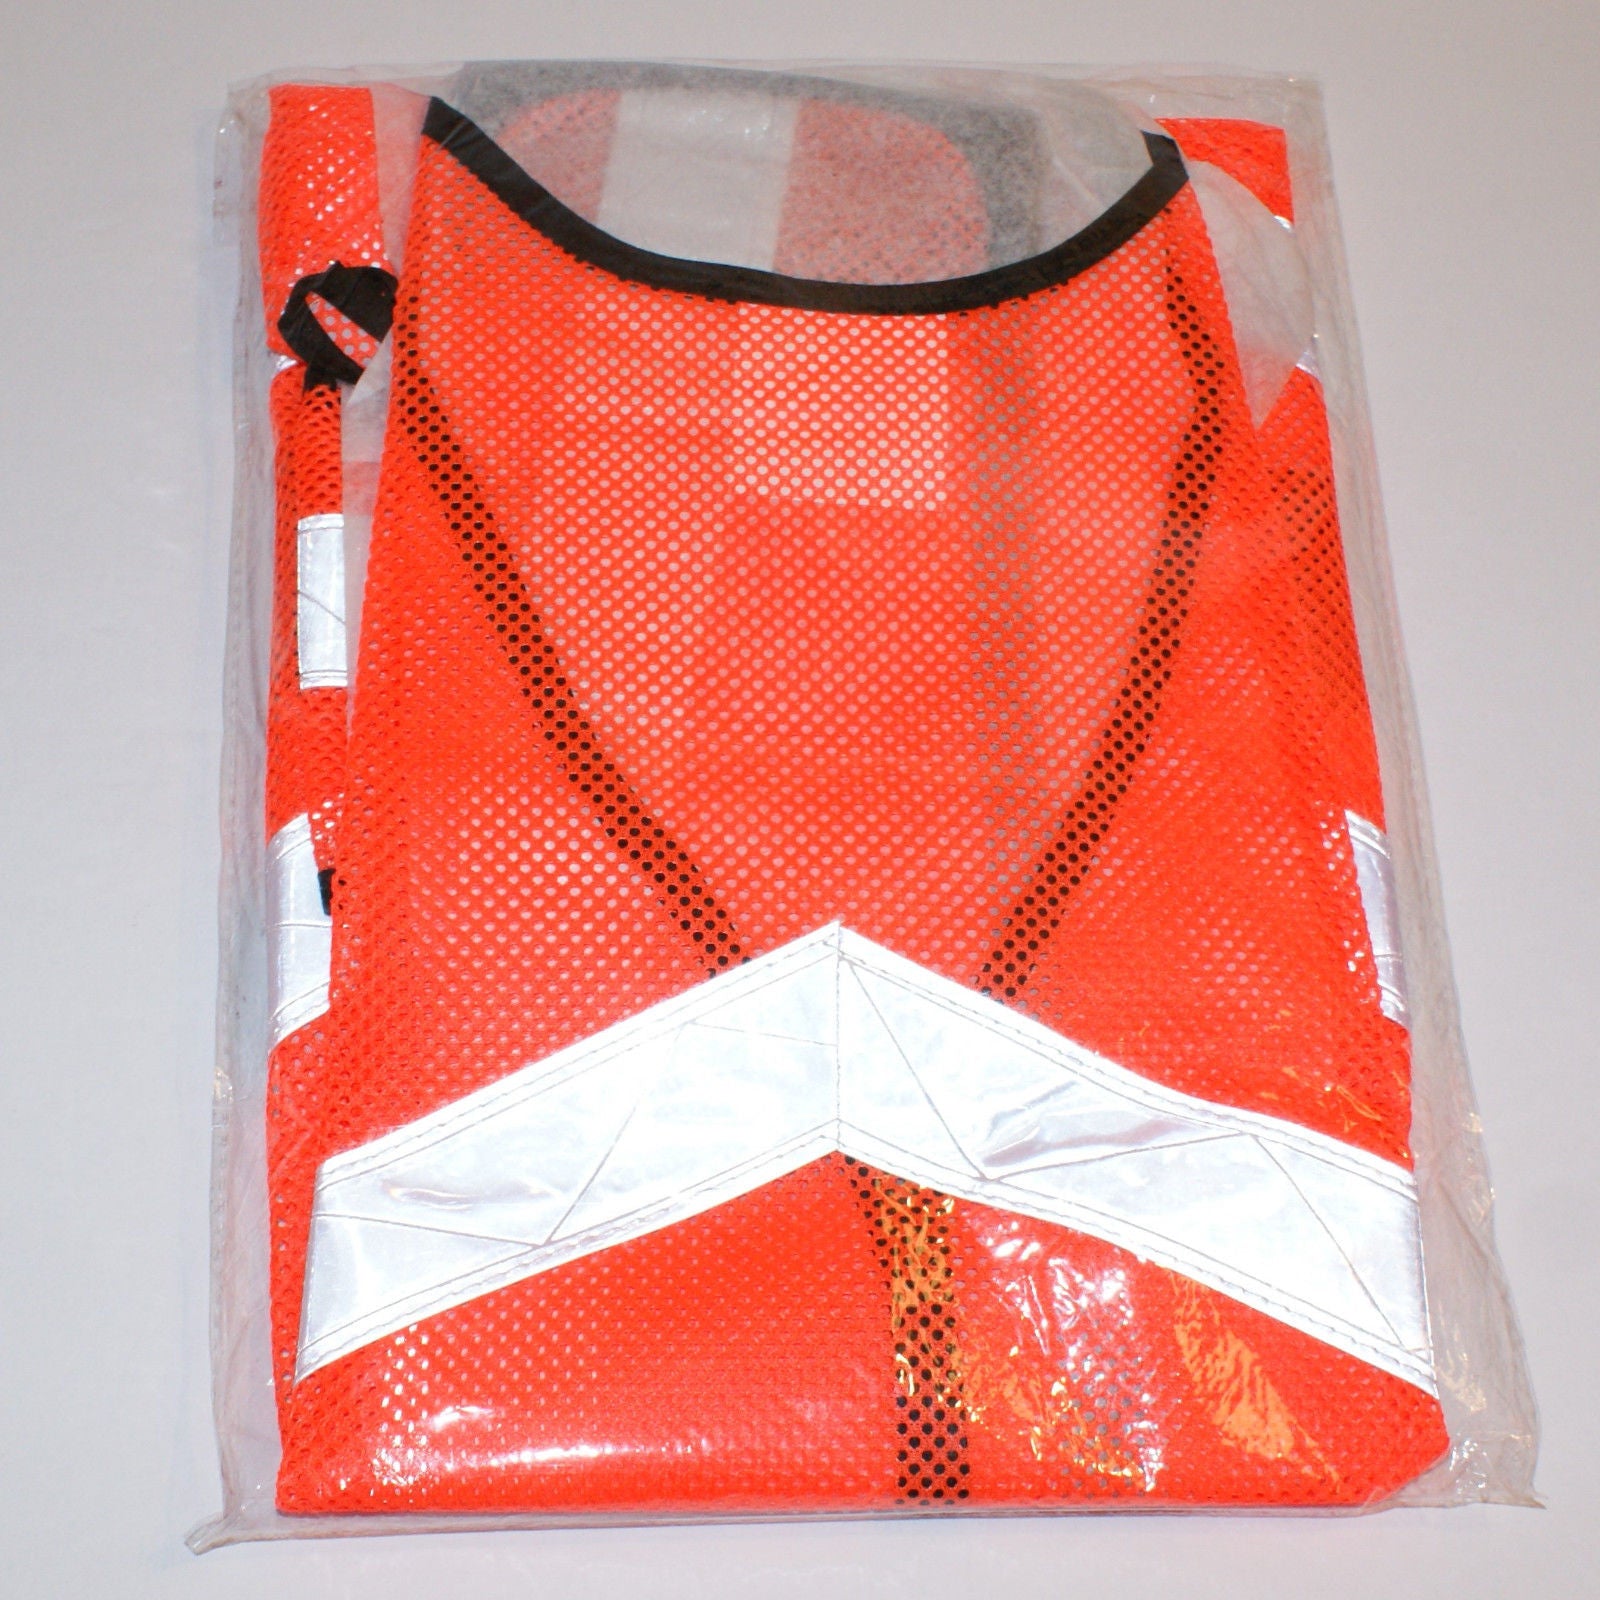 Ironwear Orange Reflective Safety Vests 1pcs. 7015-0 One Size Fits All